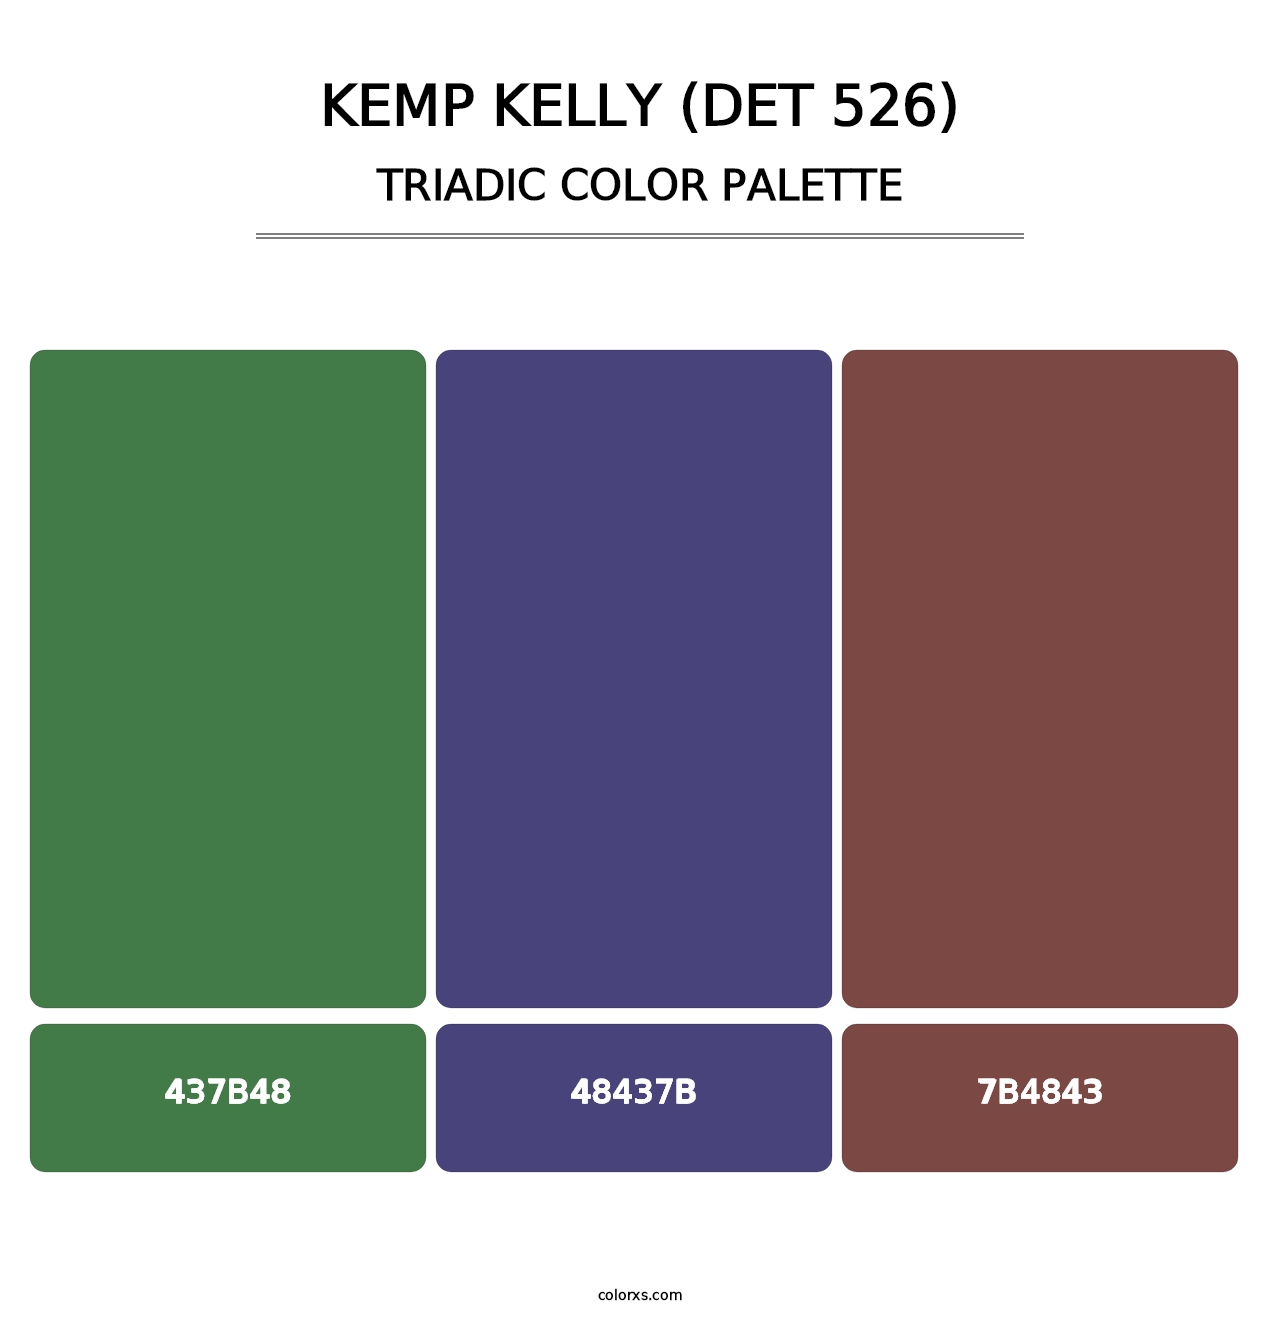 Kemp Kelly (DET 526) - Triadic Color Palette